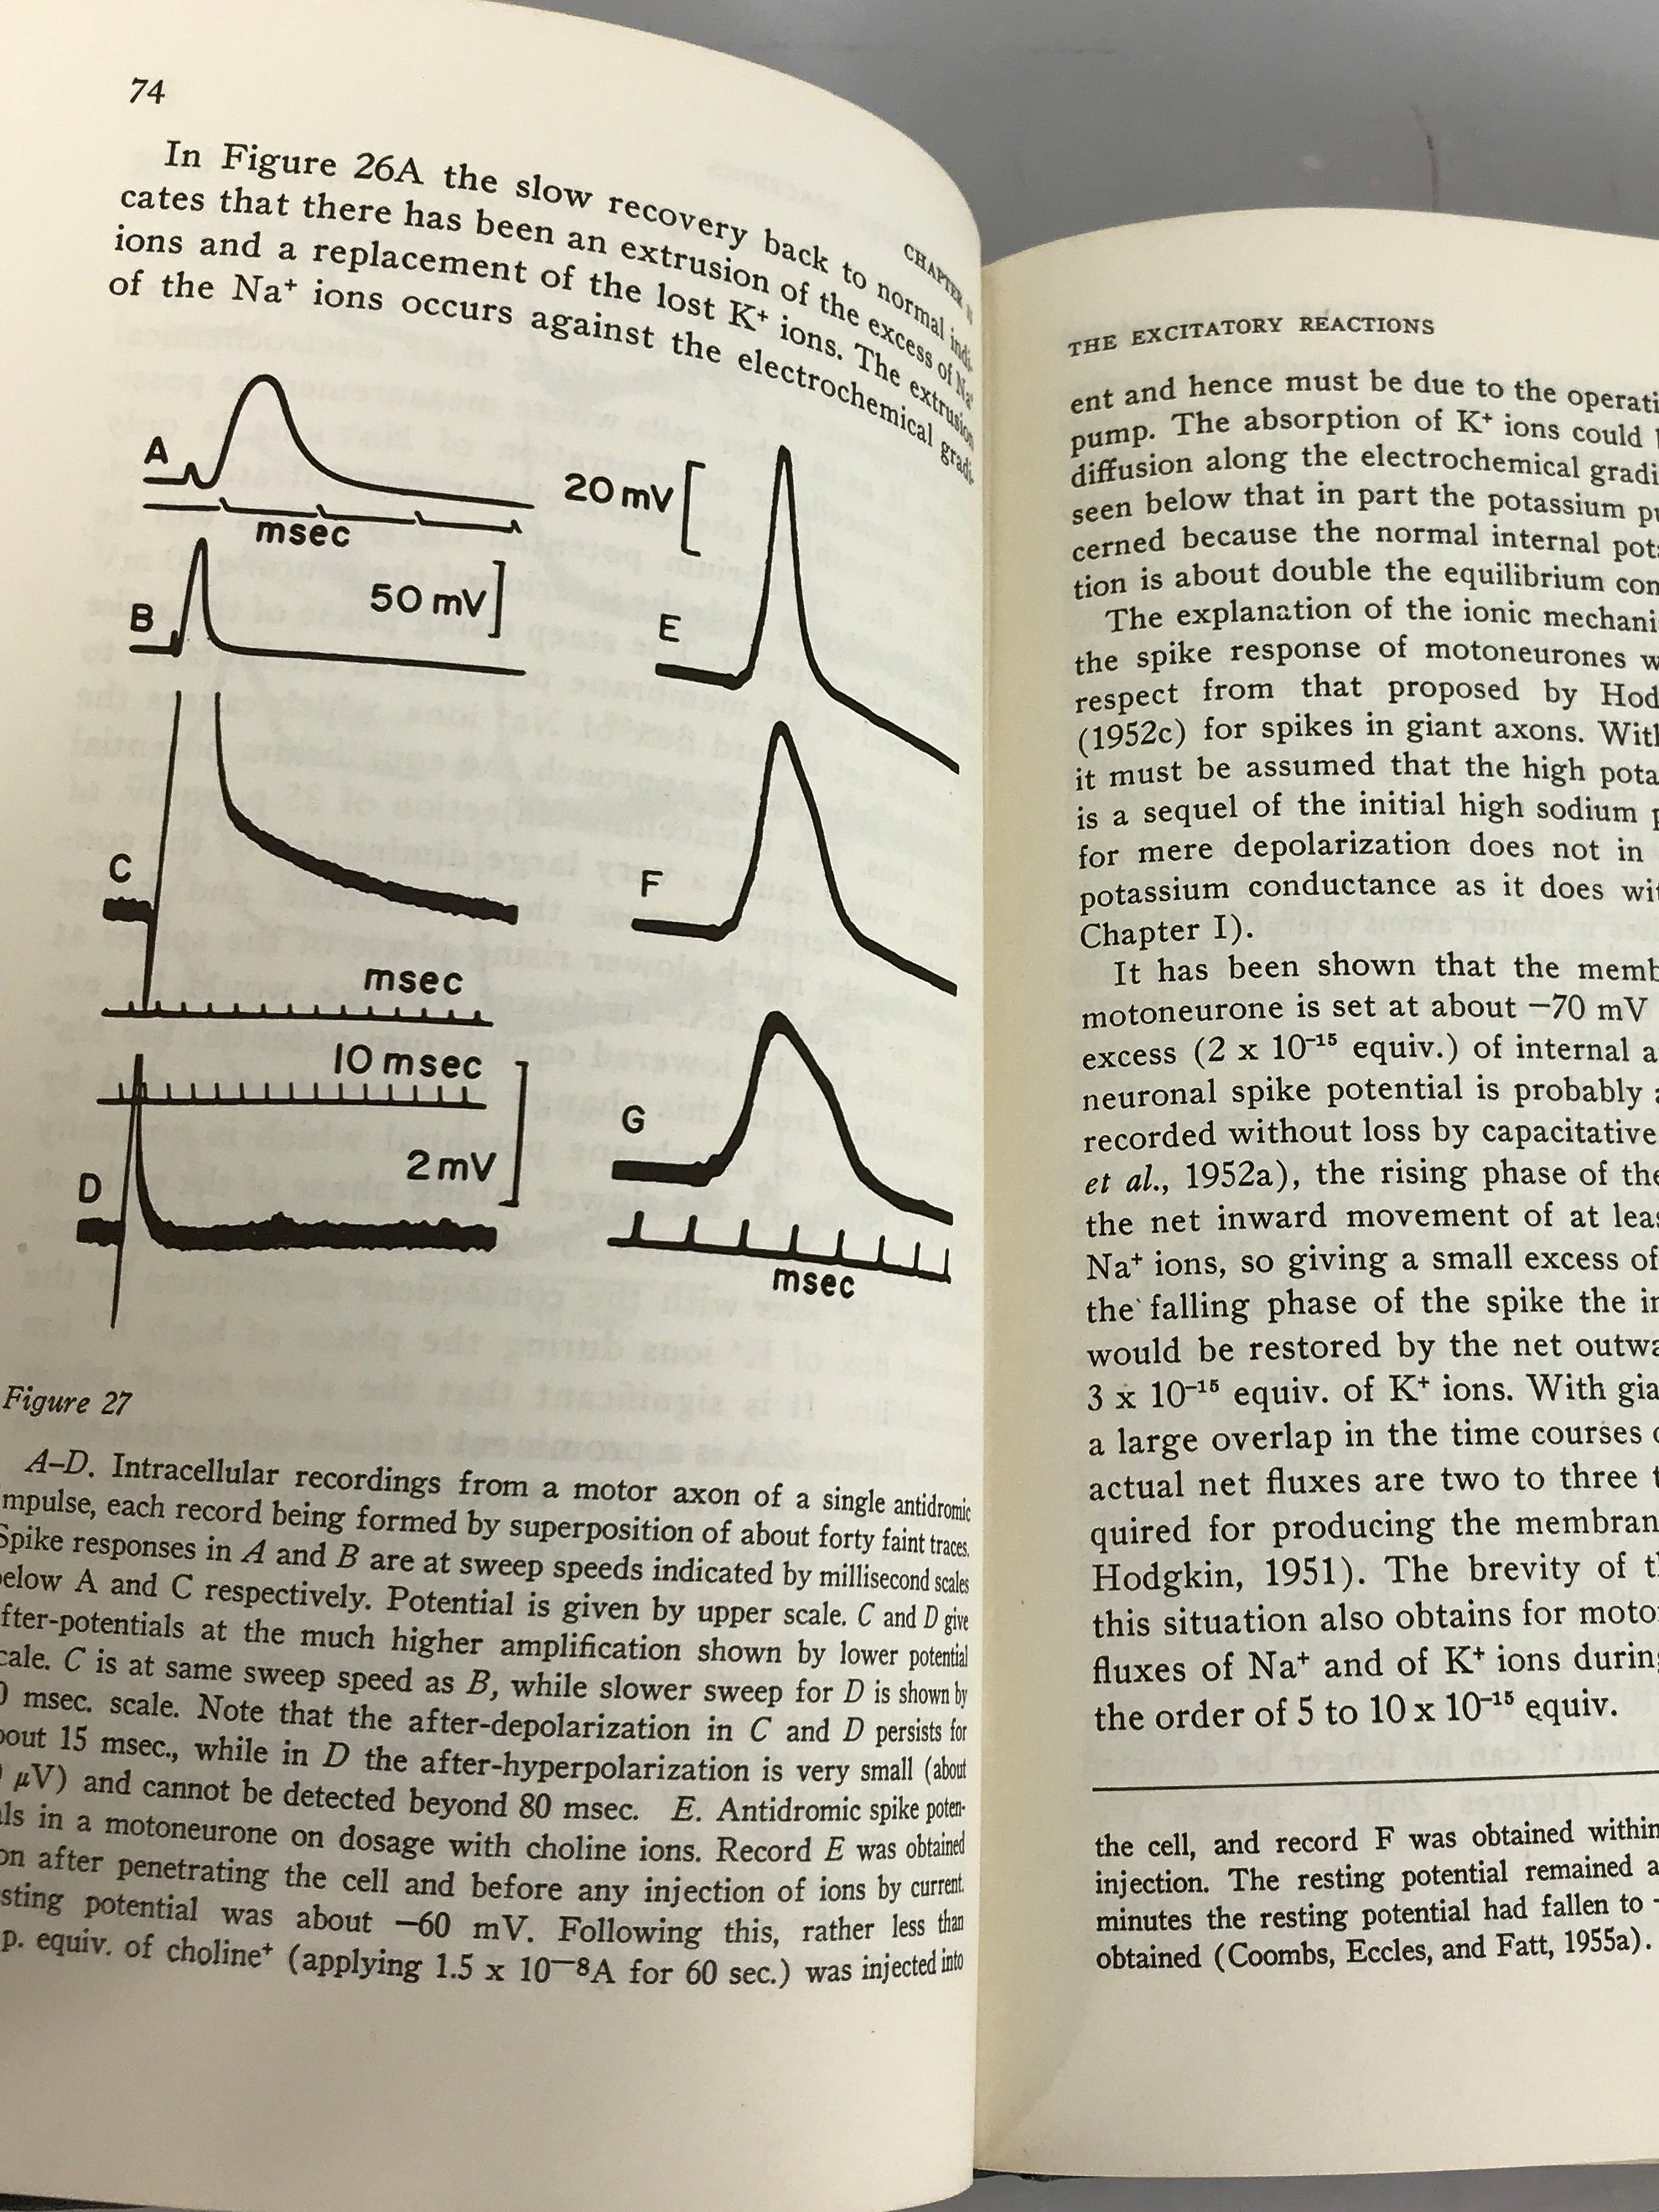 Lot of 2 Nobel Winner John C. Eccles Science Books Signed 1960-1967 HC DJ